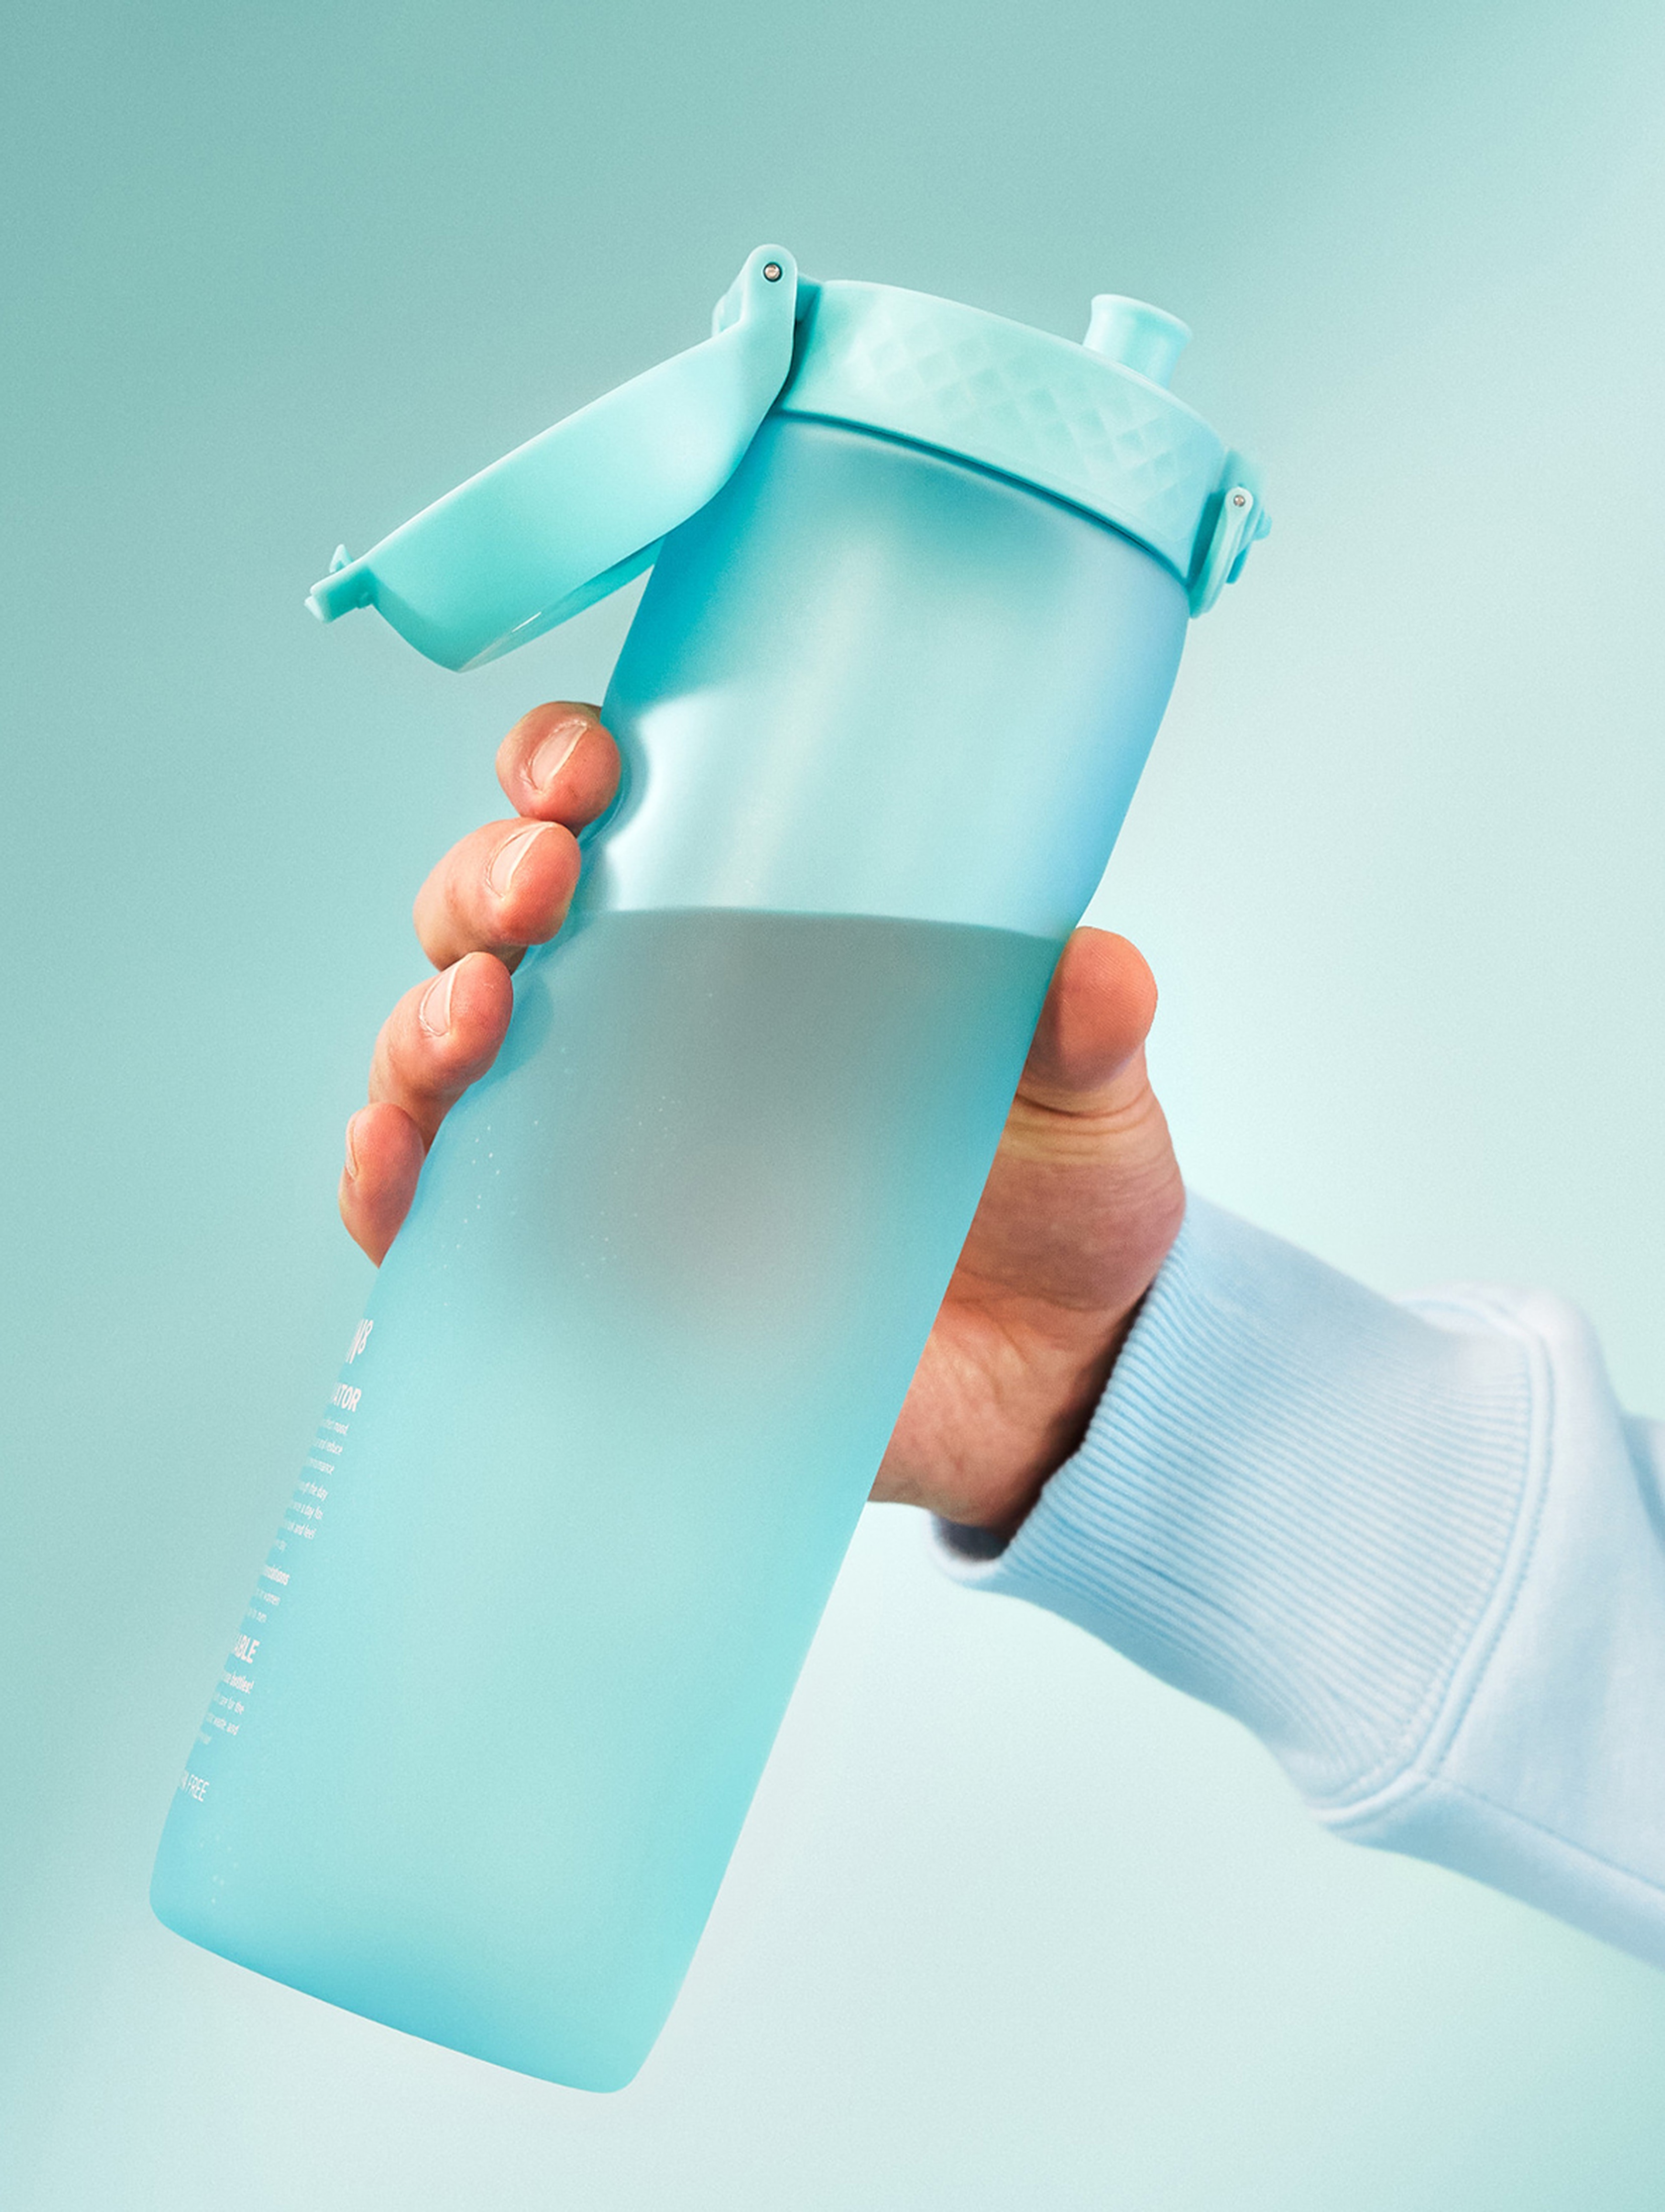 Butelka na wodę ION8 BPA Free Sonic Blue Motivator 1200ml - niebieska